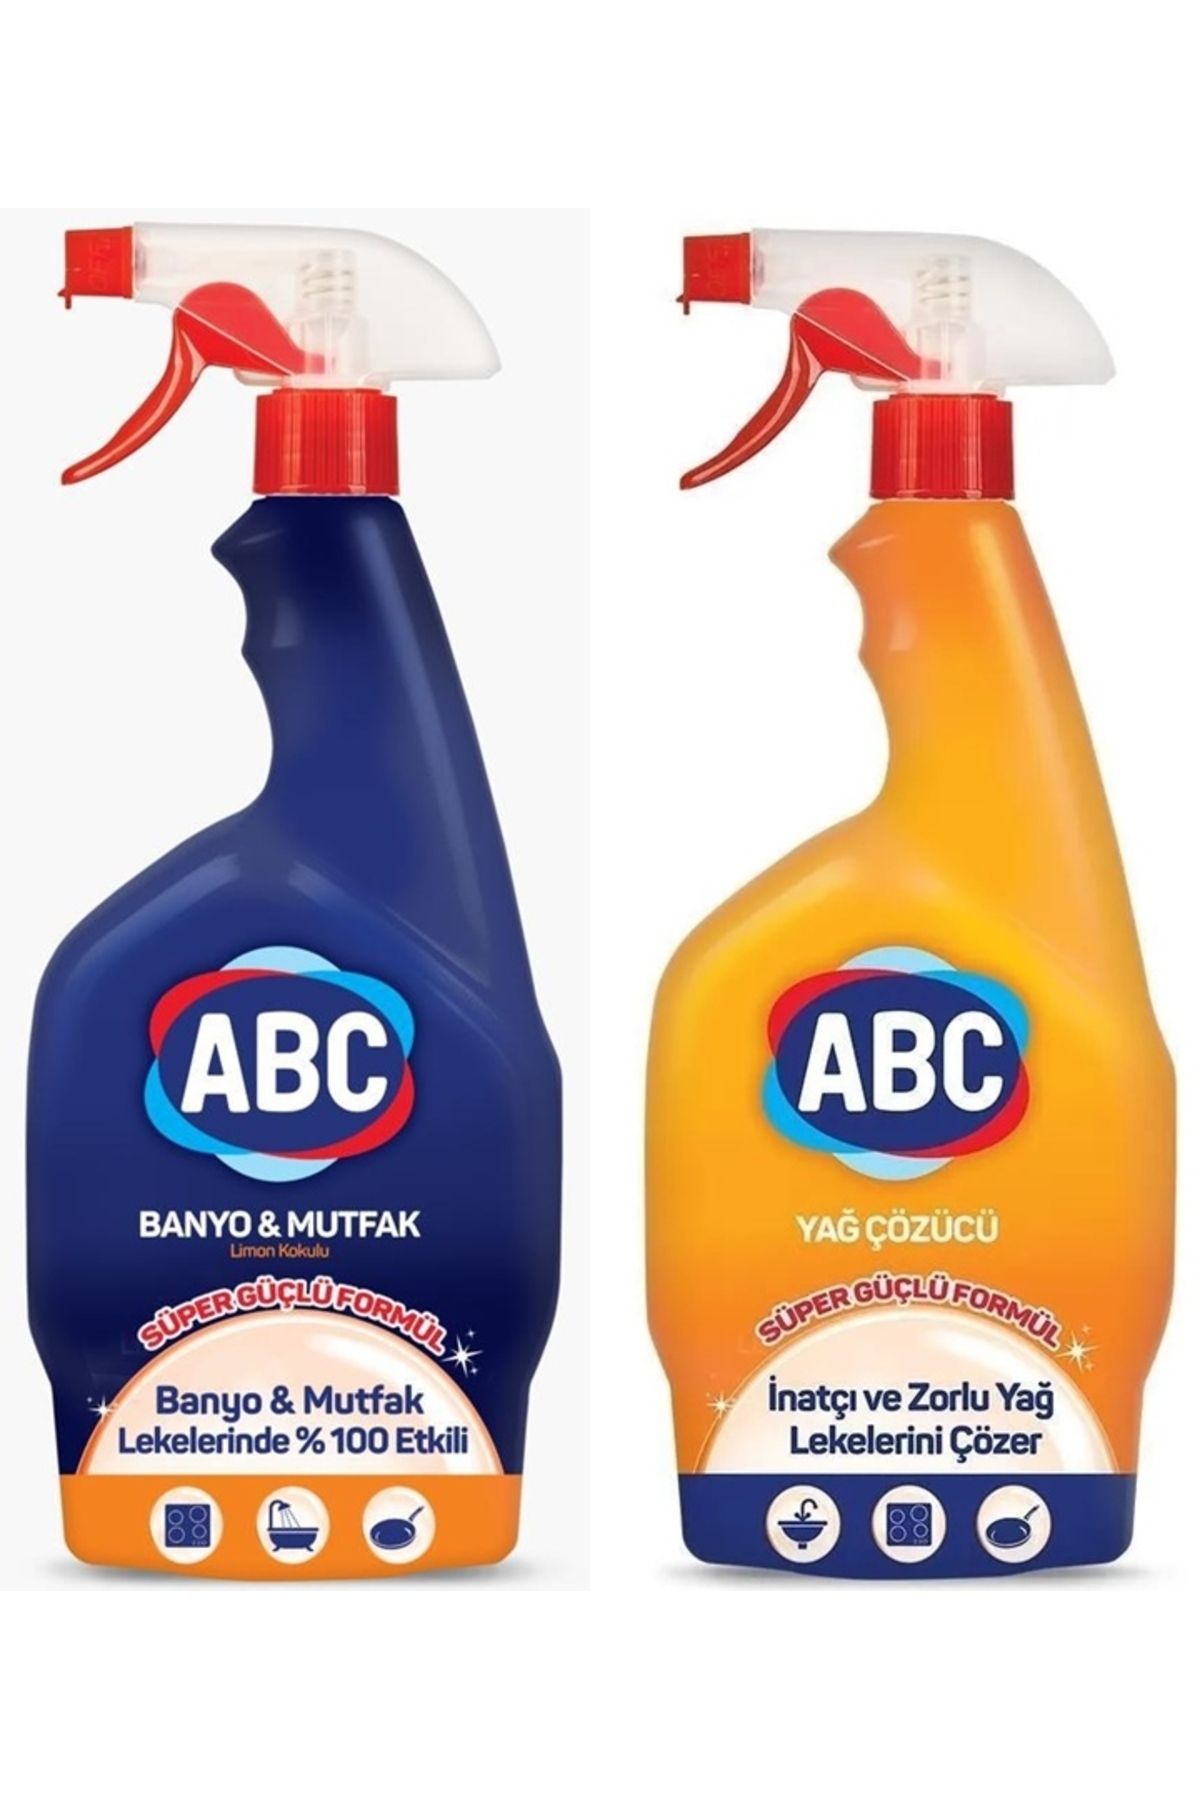 ABC Mutfak-Banyo Sprey Limon Kokulu 750 ml+Yağ çözücü sprey 750 ml